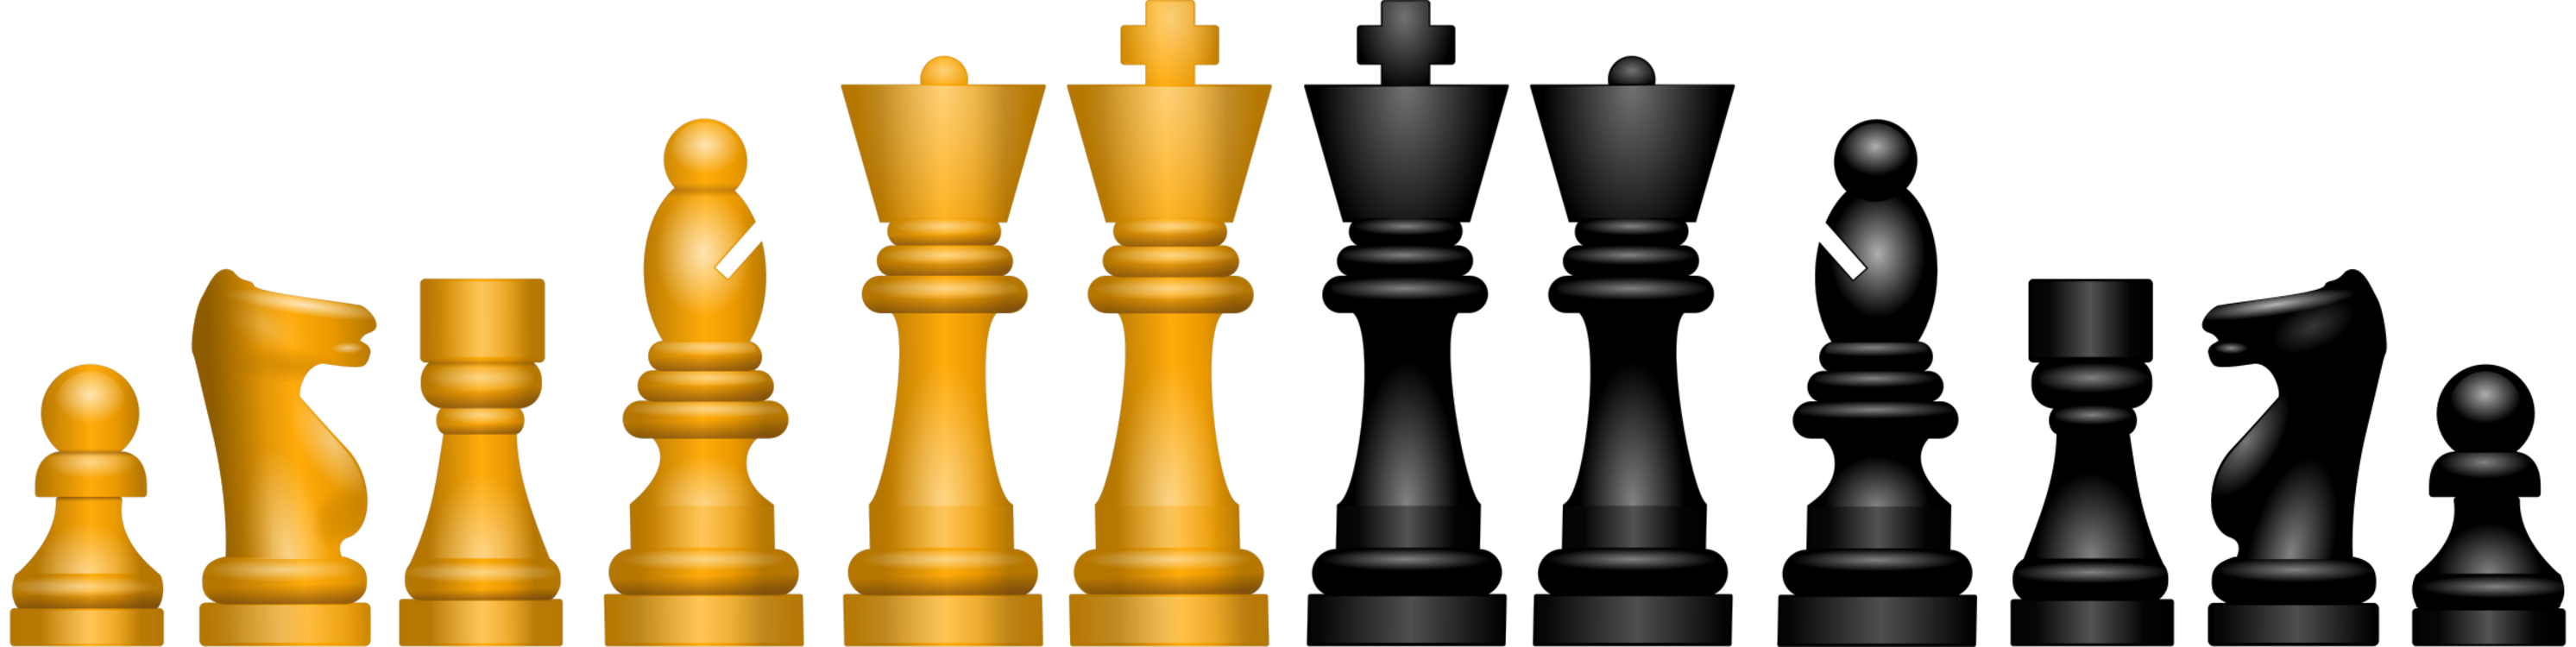 Chessboard,Board Game,Recreation